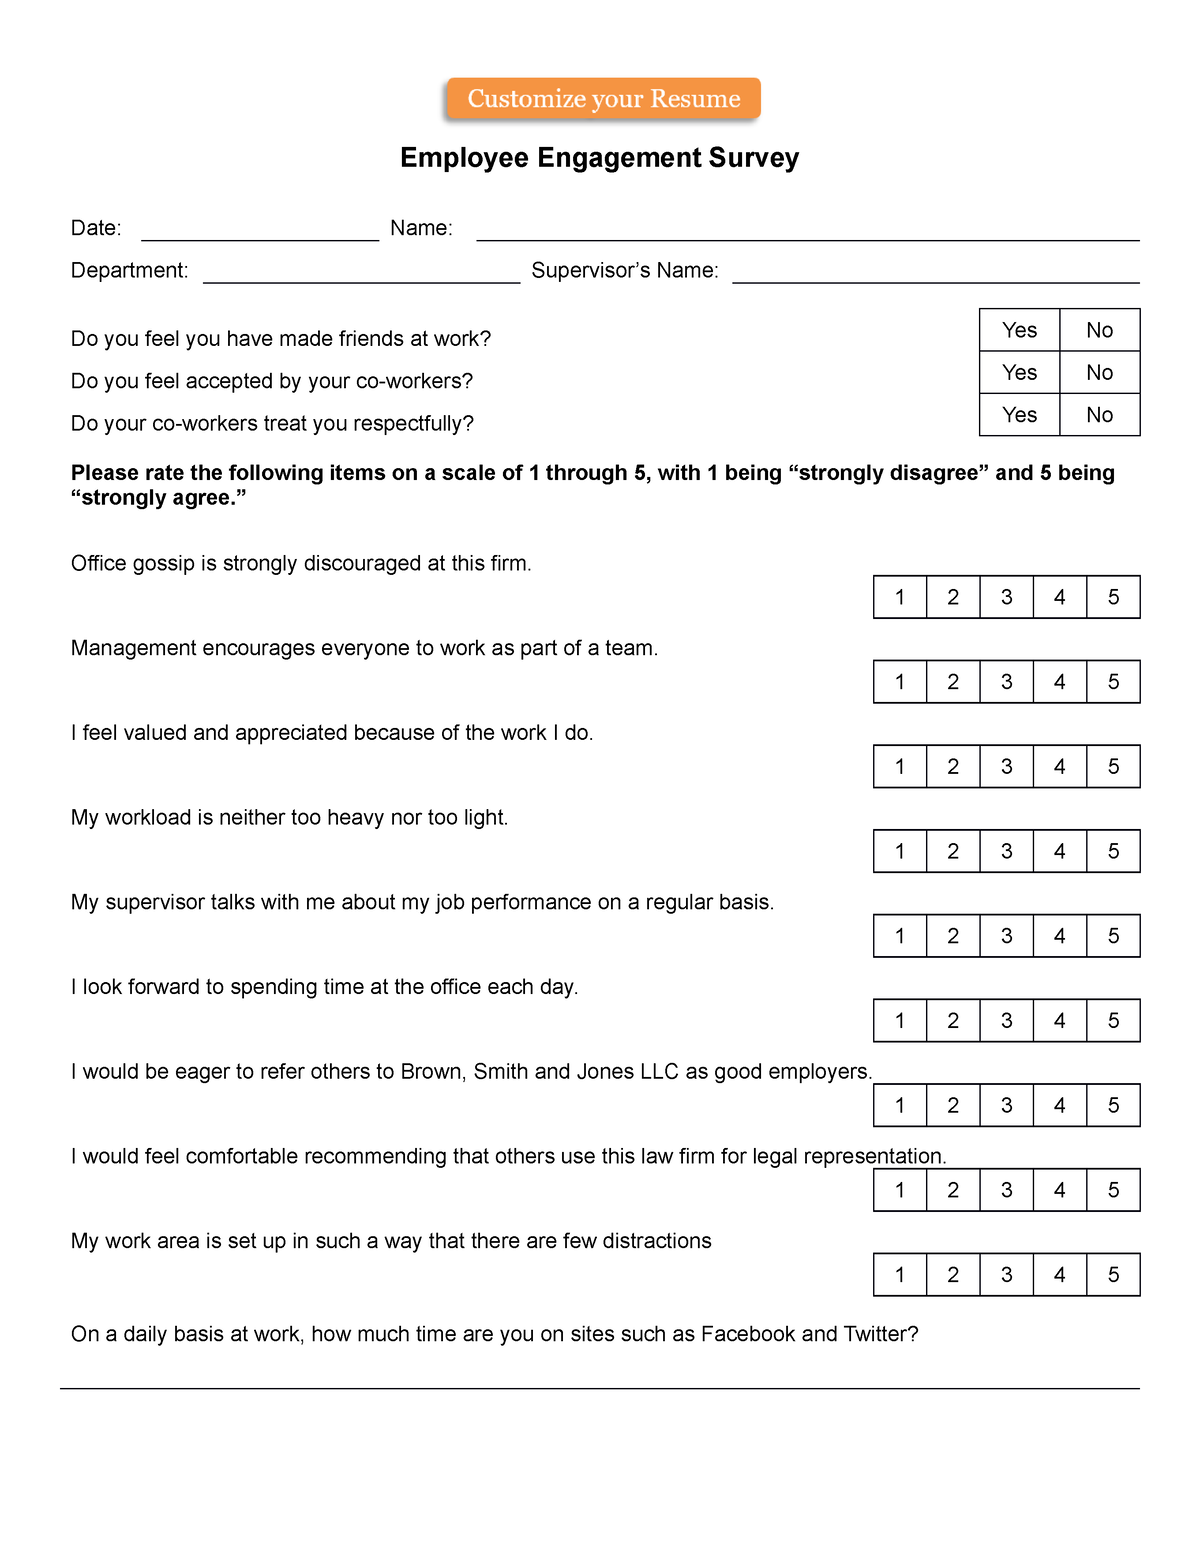 Compromiso de los empleados - Employee Engagement Survey Date: Name ...